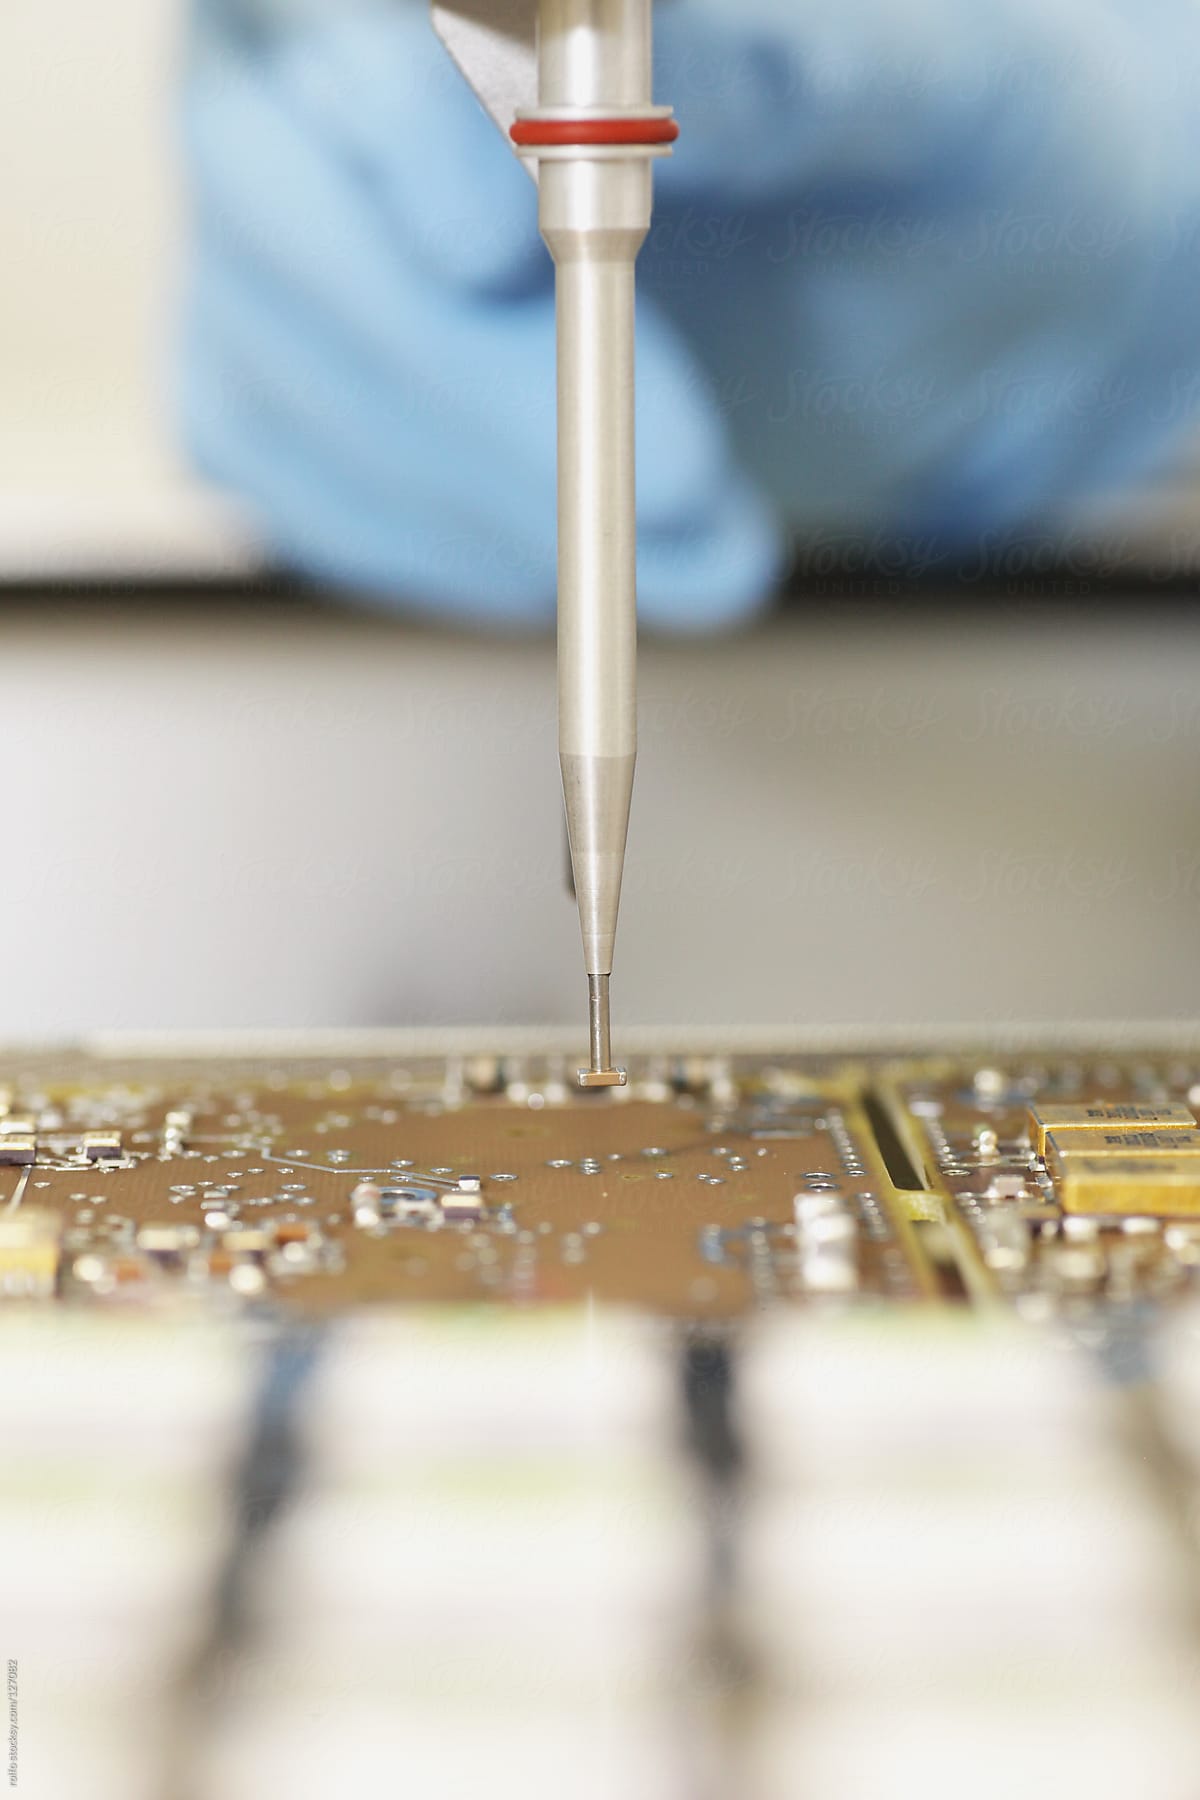 Technician soldering an electronics circuit board